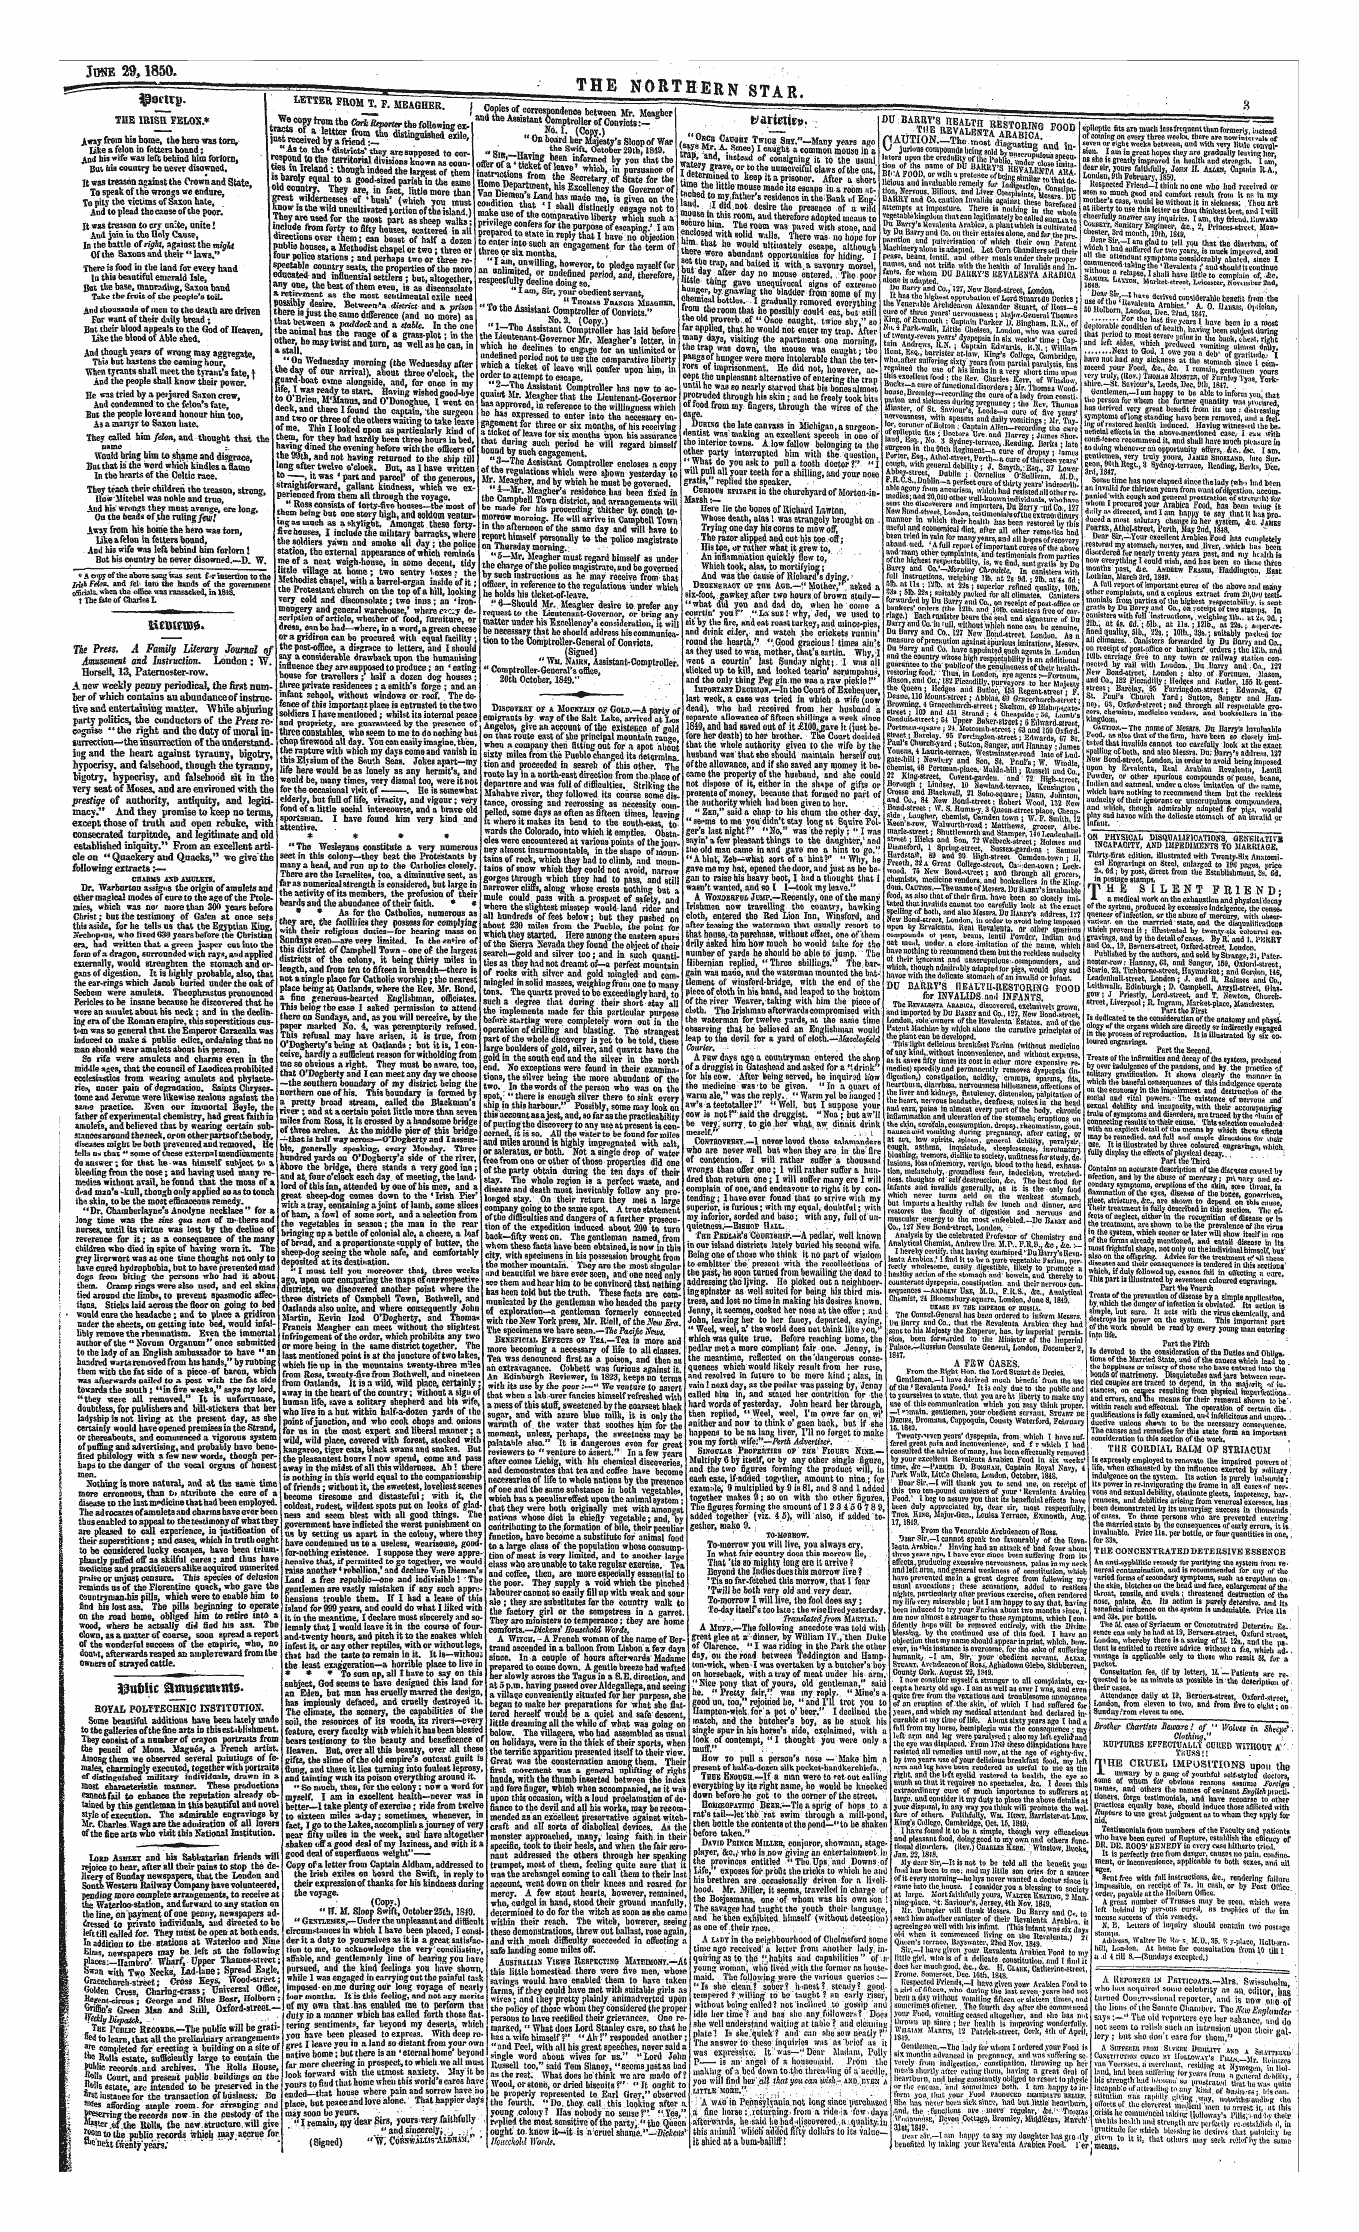 Northern Star (1837-1852): jS F Y, 1st edition - 53utmc &Mu$Nmm$.